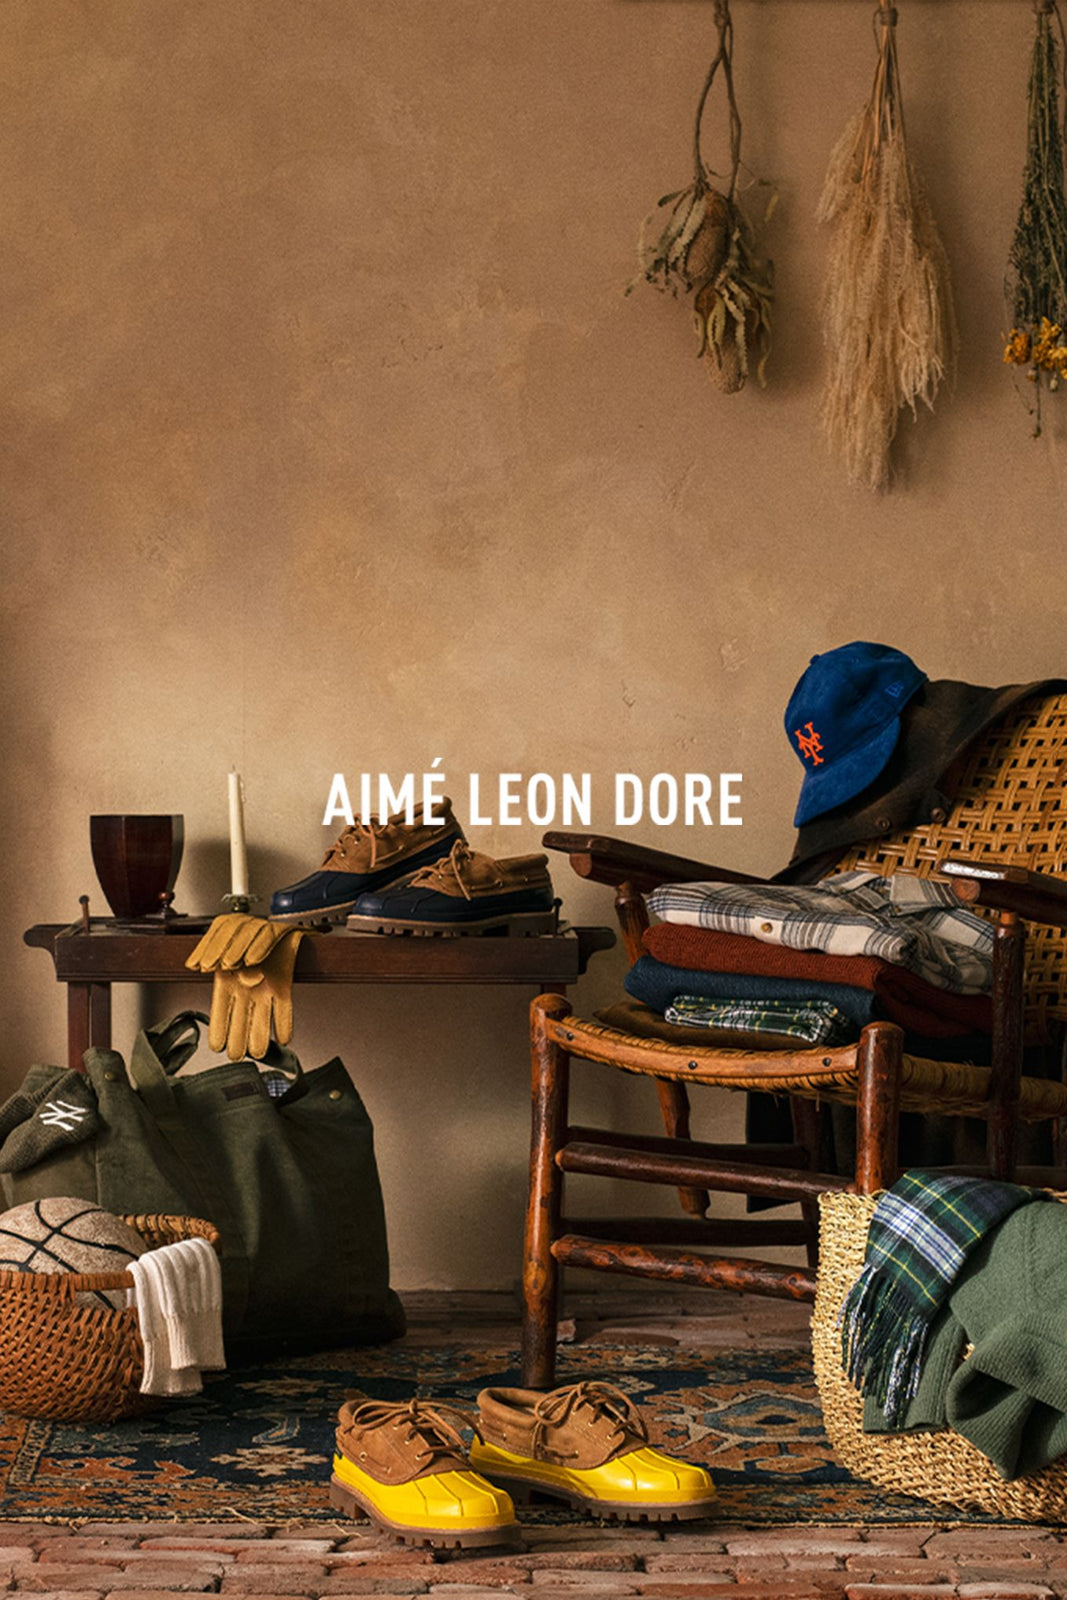 A Look Inside the Aimé Leon Dore x Woolrich London Concept Shop